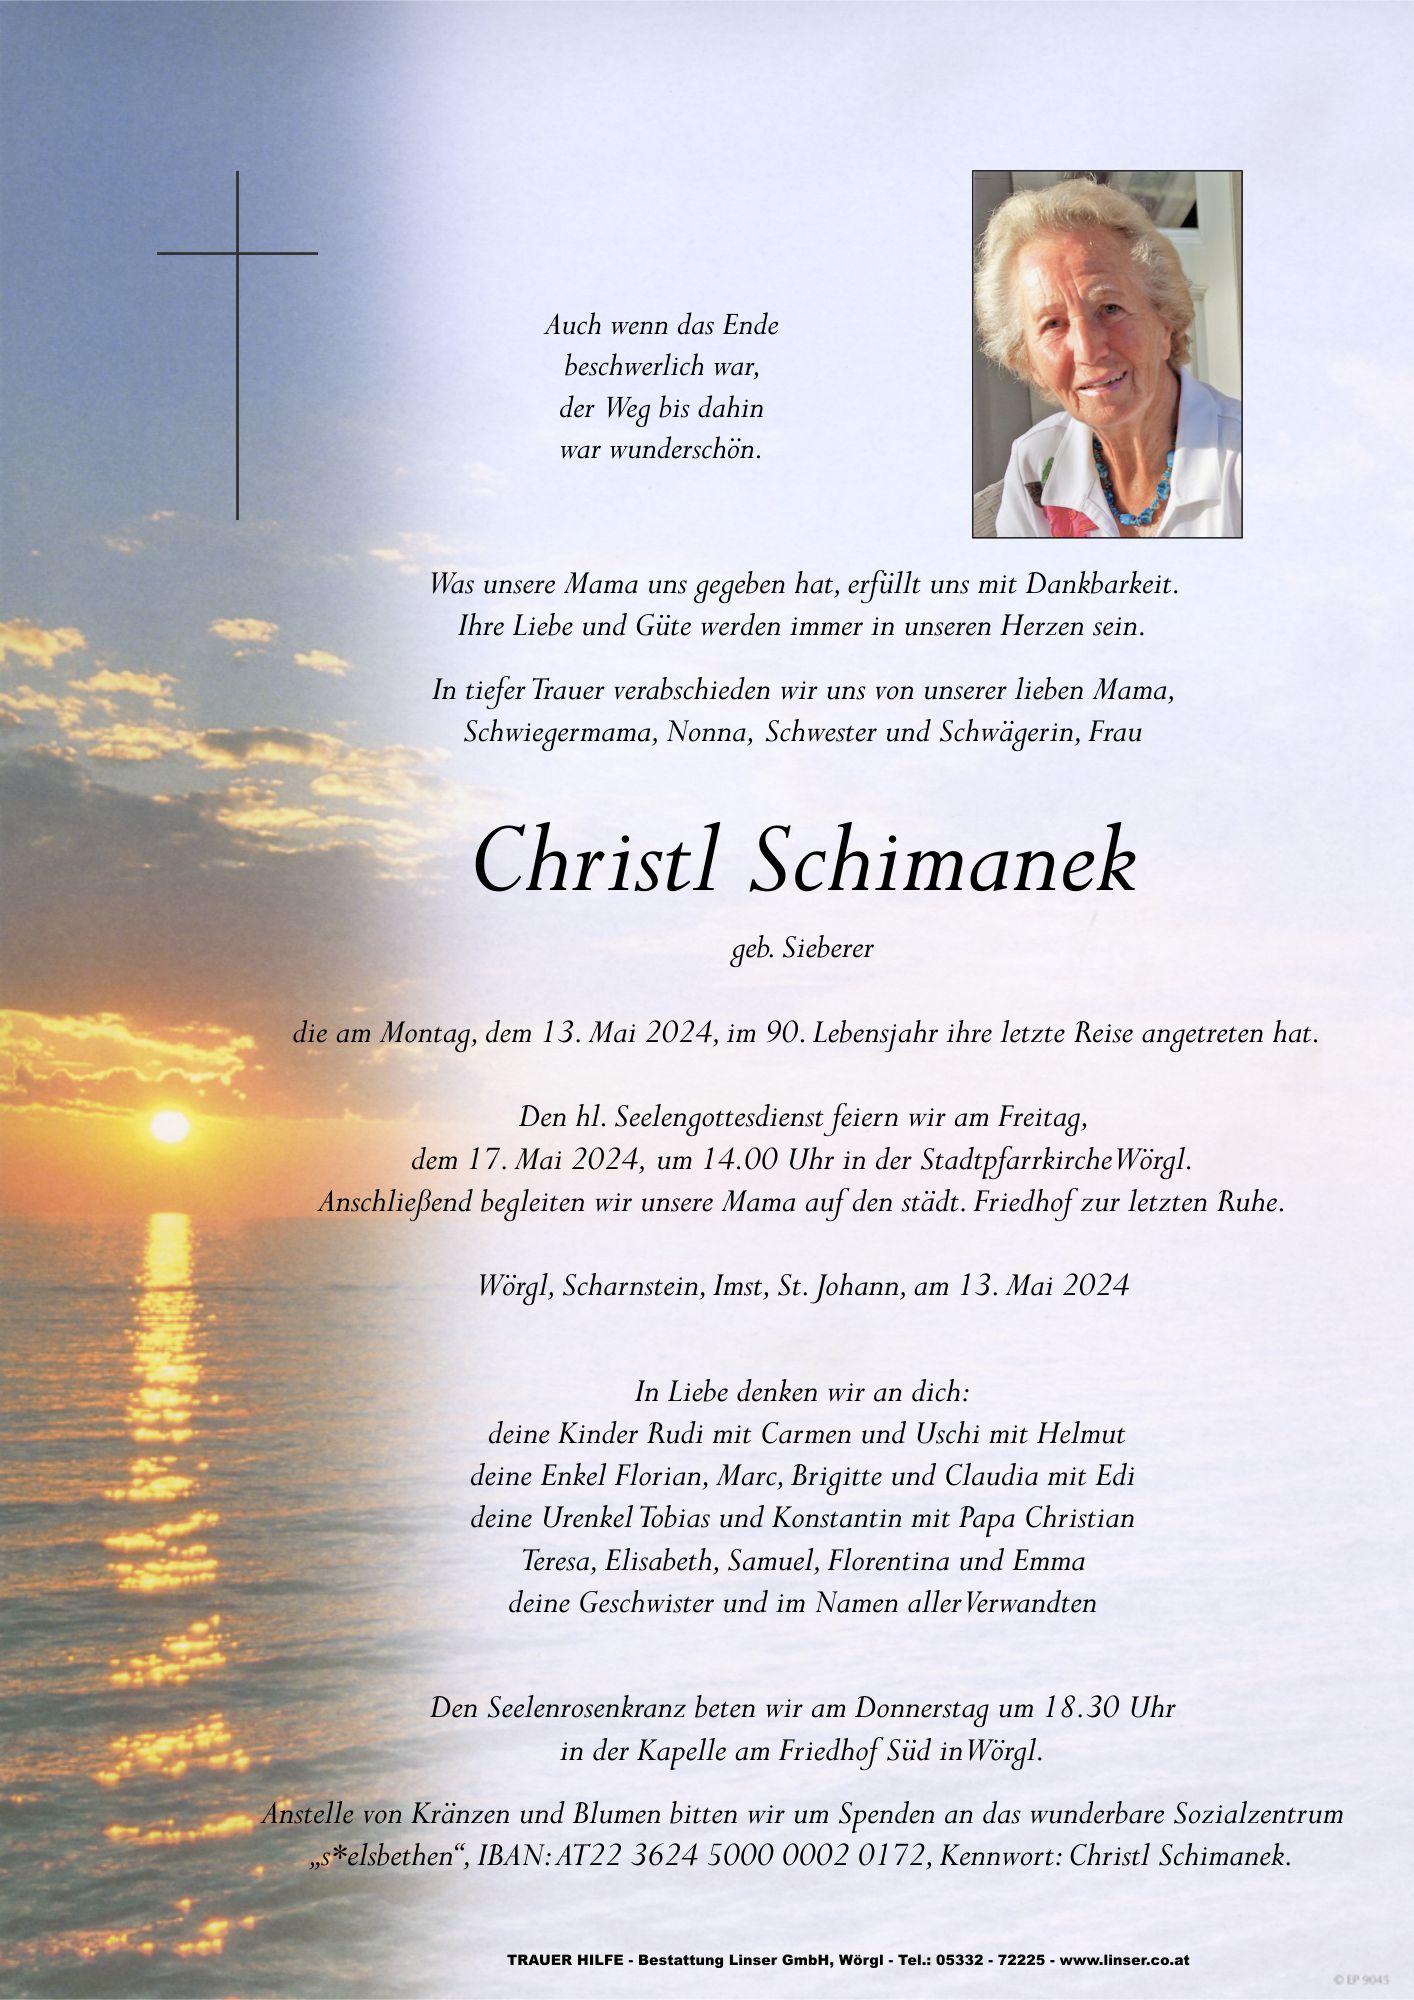 Christl Schimanek